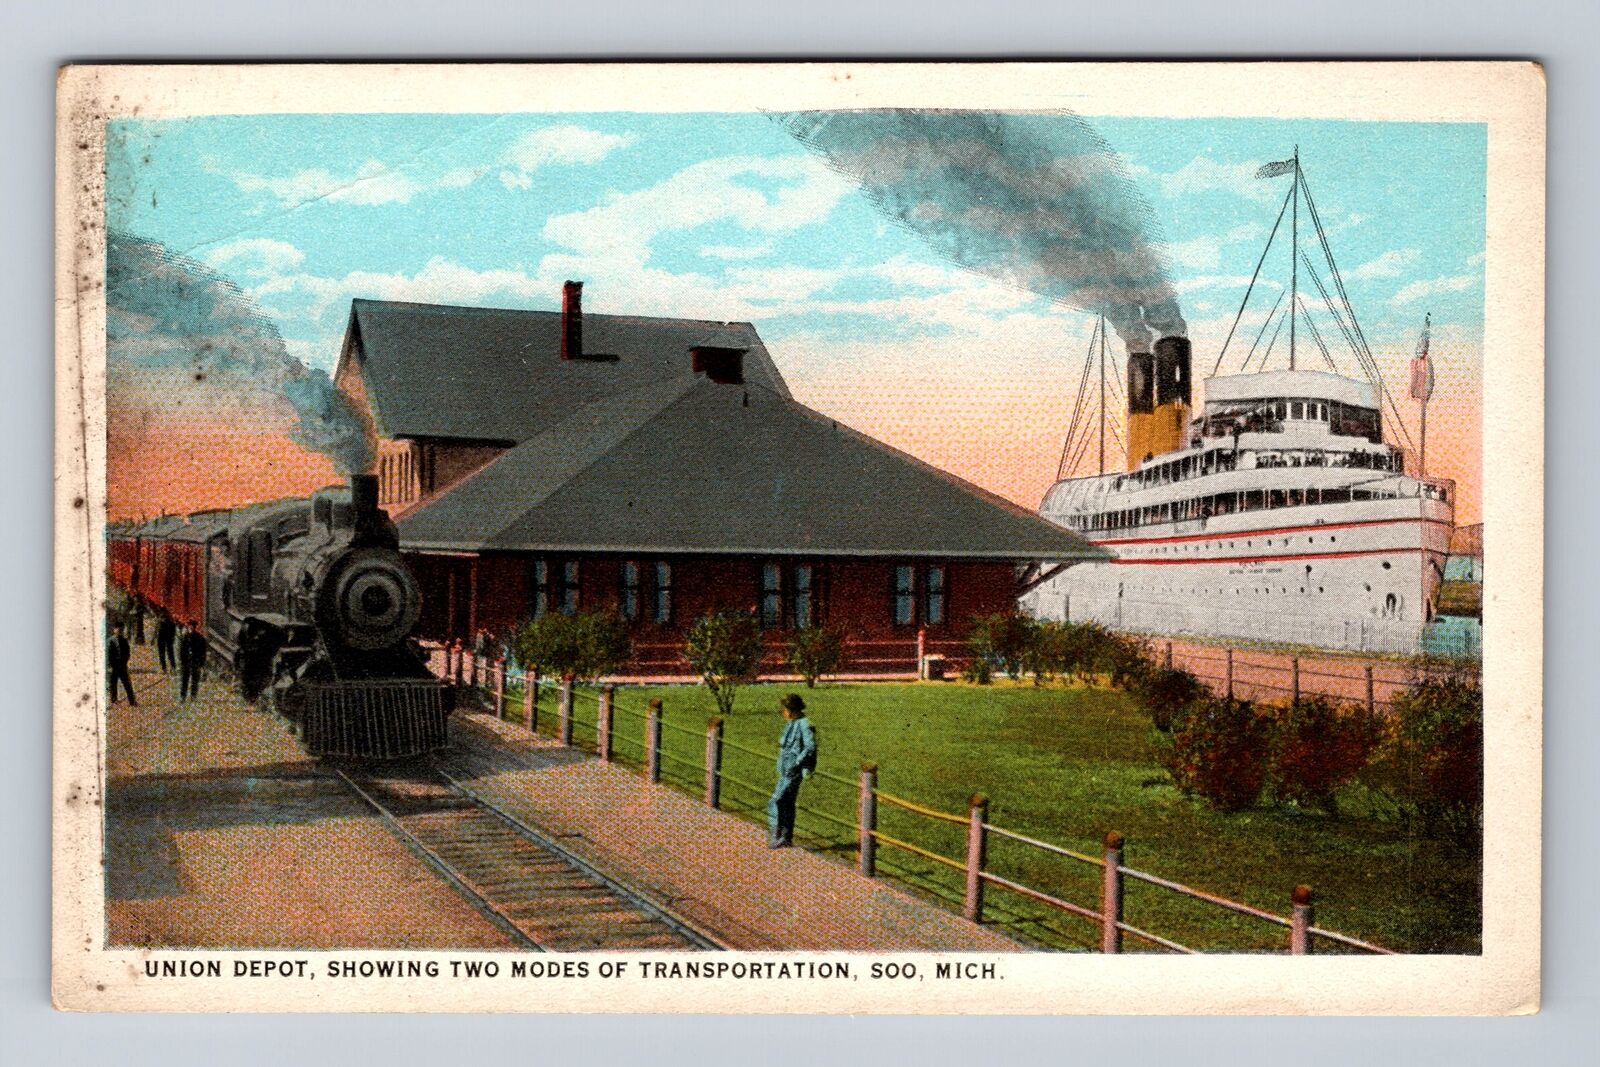 Sault Ste Marie MI-Michigan, Union Depot-Transportation Ways Vintage Postcard